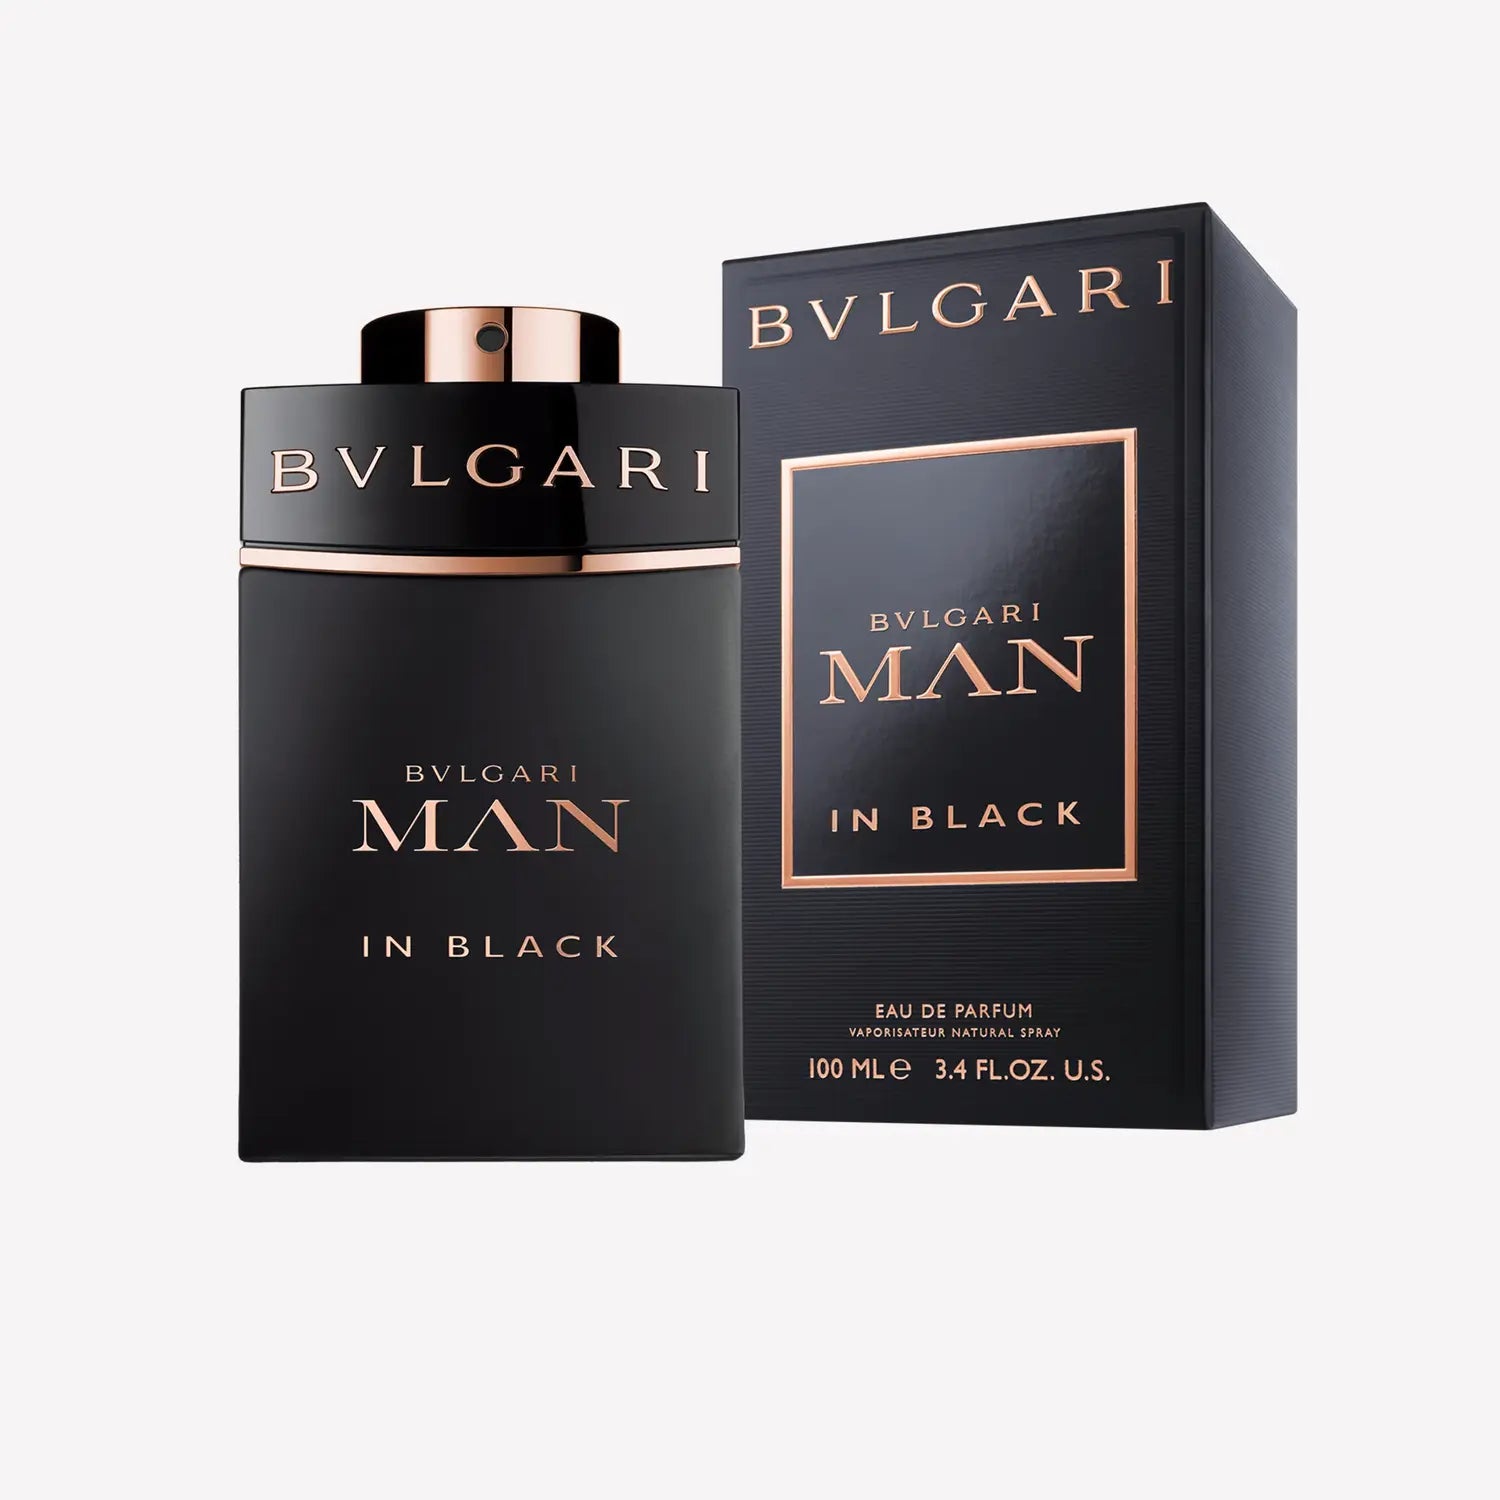 Bvlgari Man In Black by Bvlgari 3.4 oz EDP Spray for Men